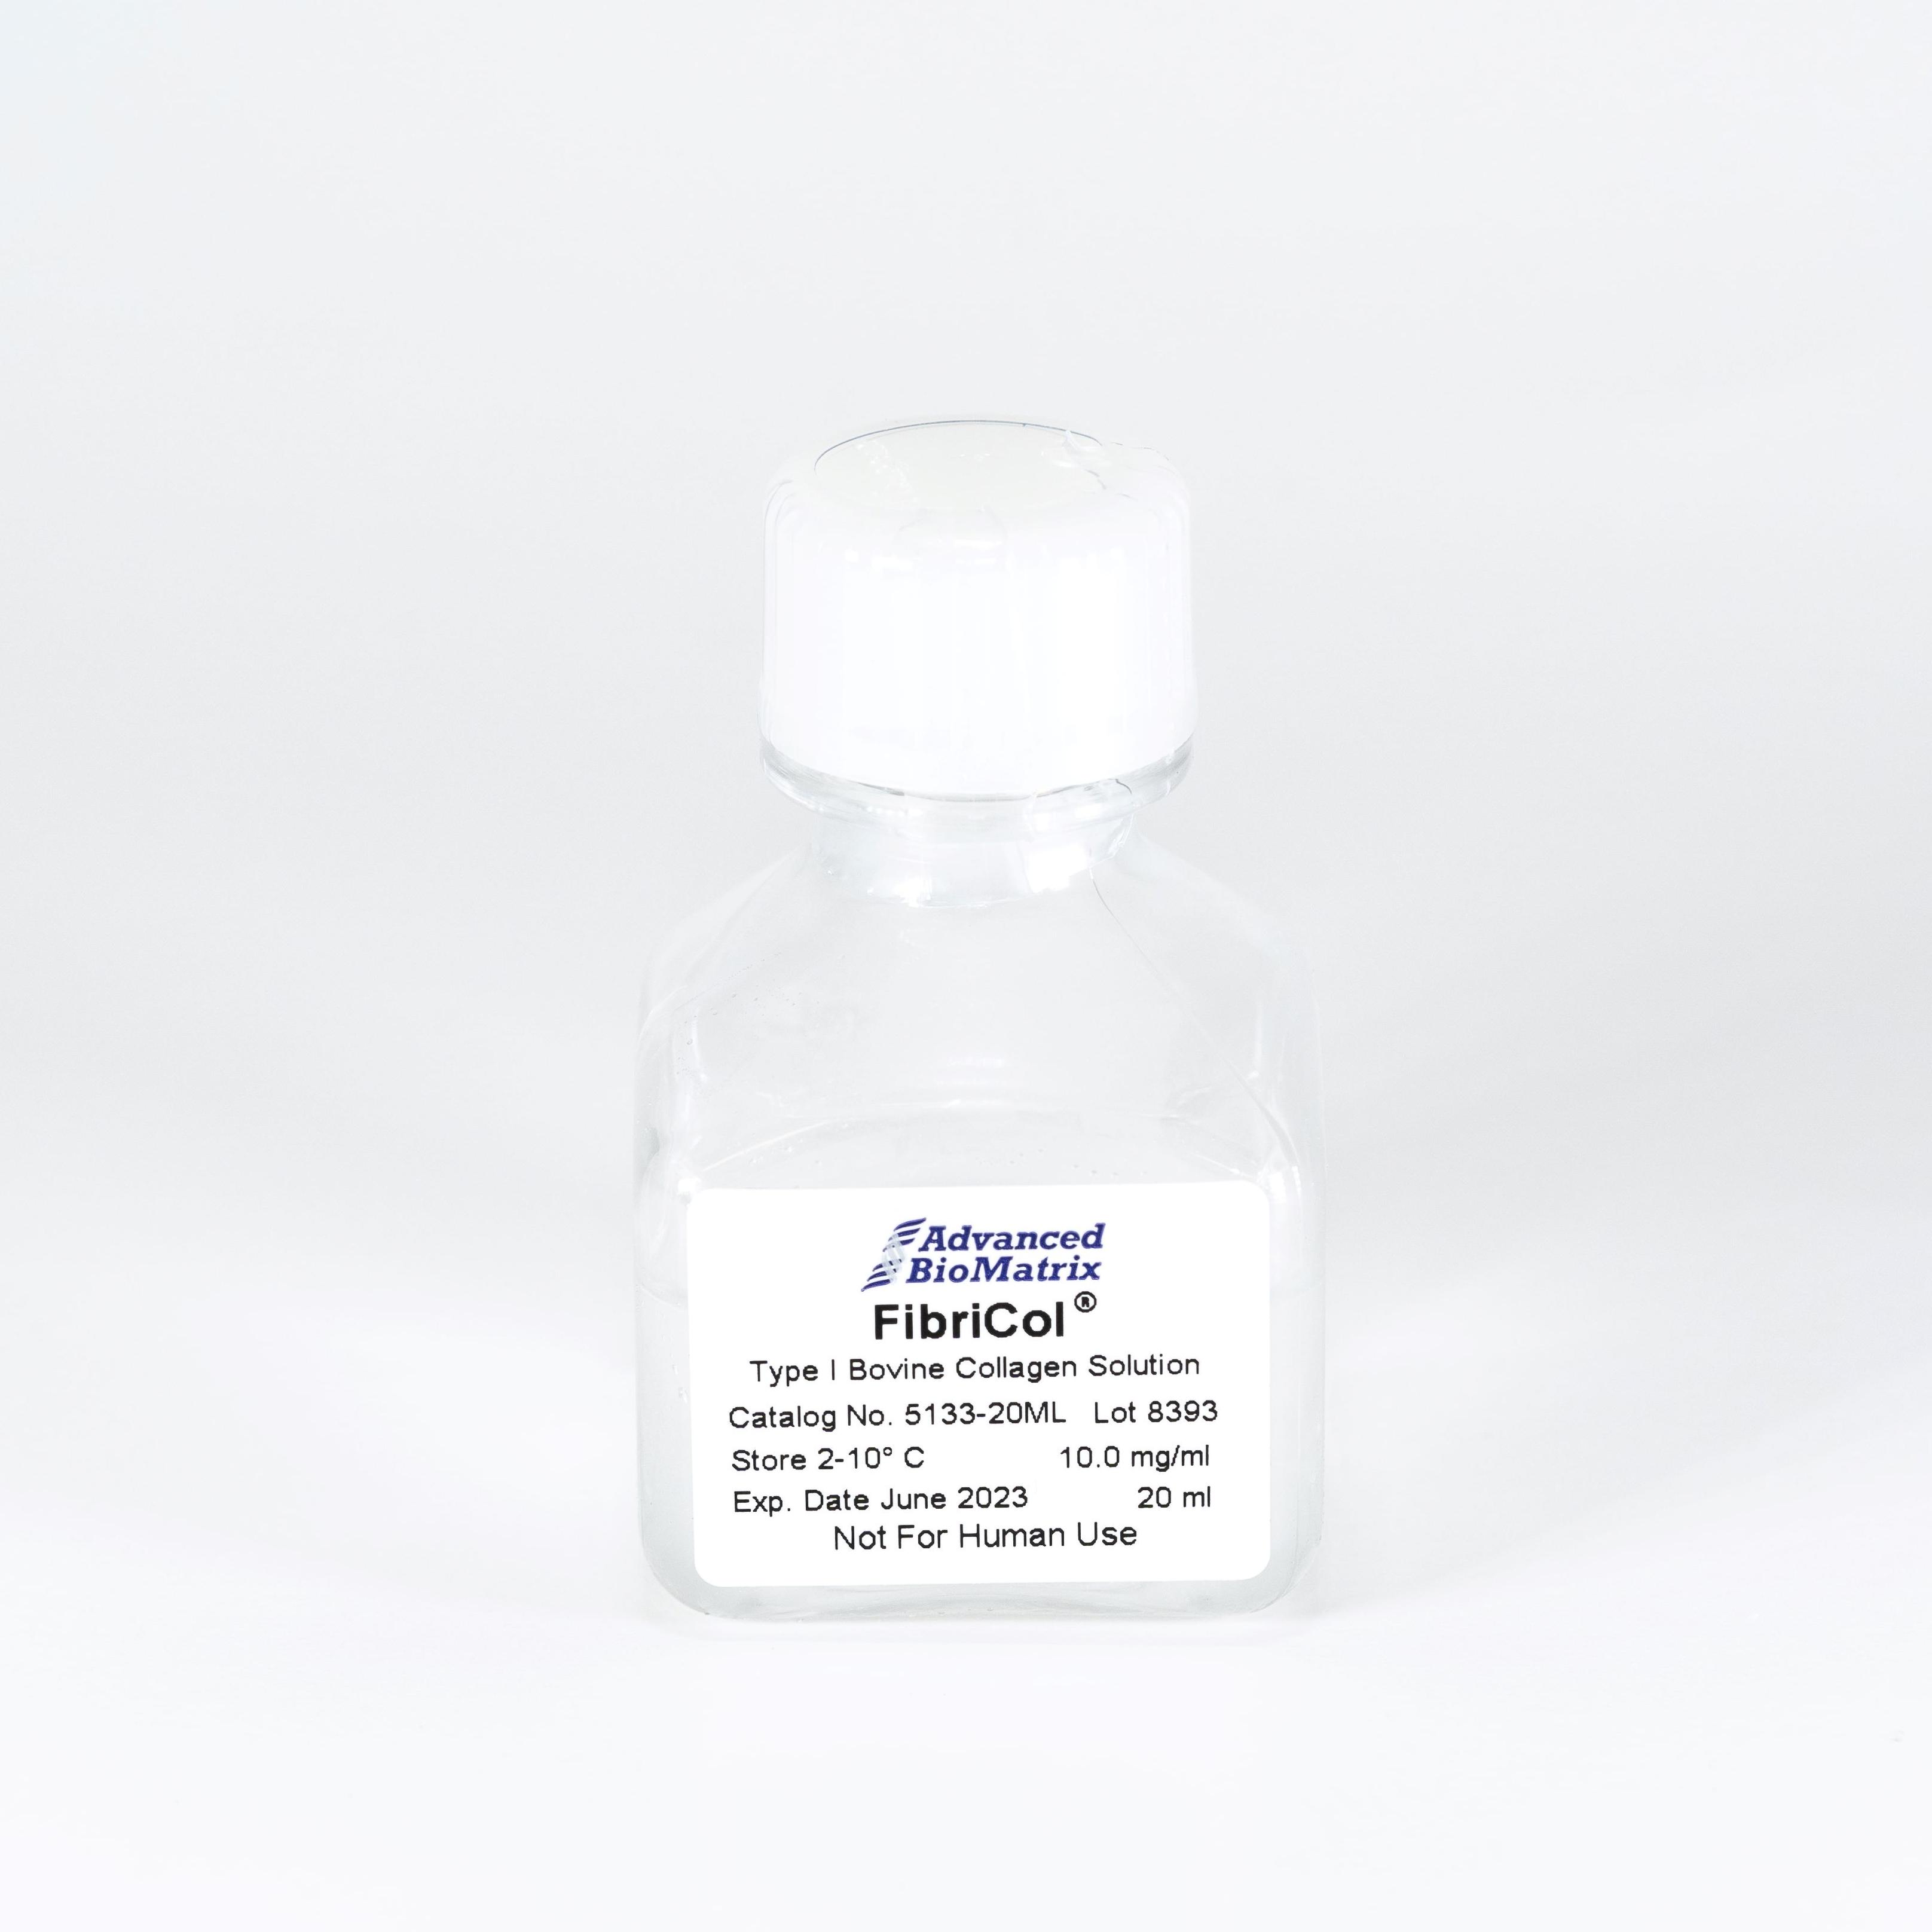 FibriCol type I collagen 10 mg/ml from Advanced BioMatrix